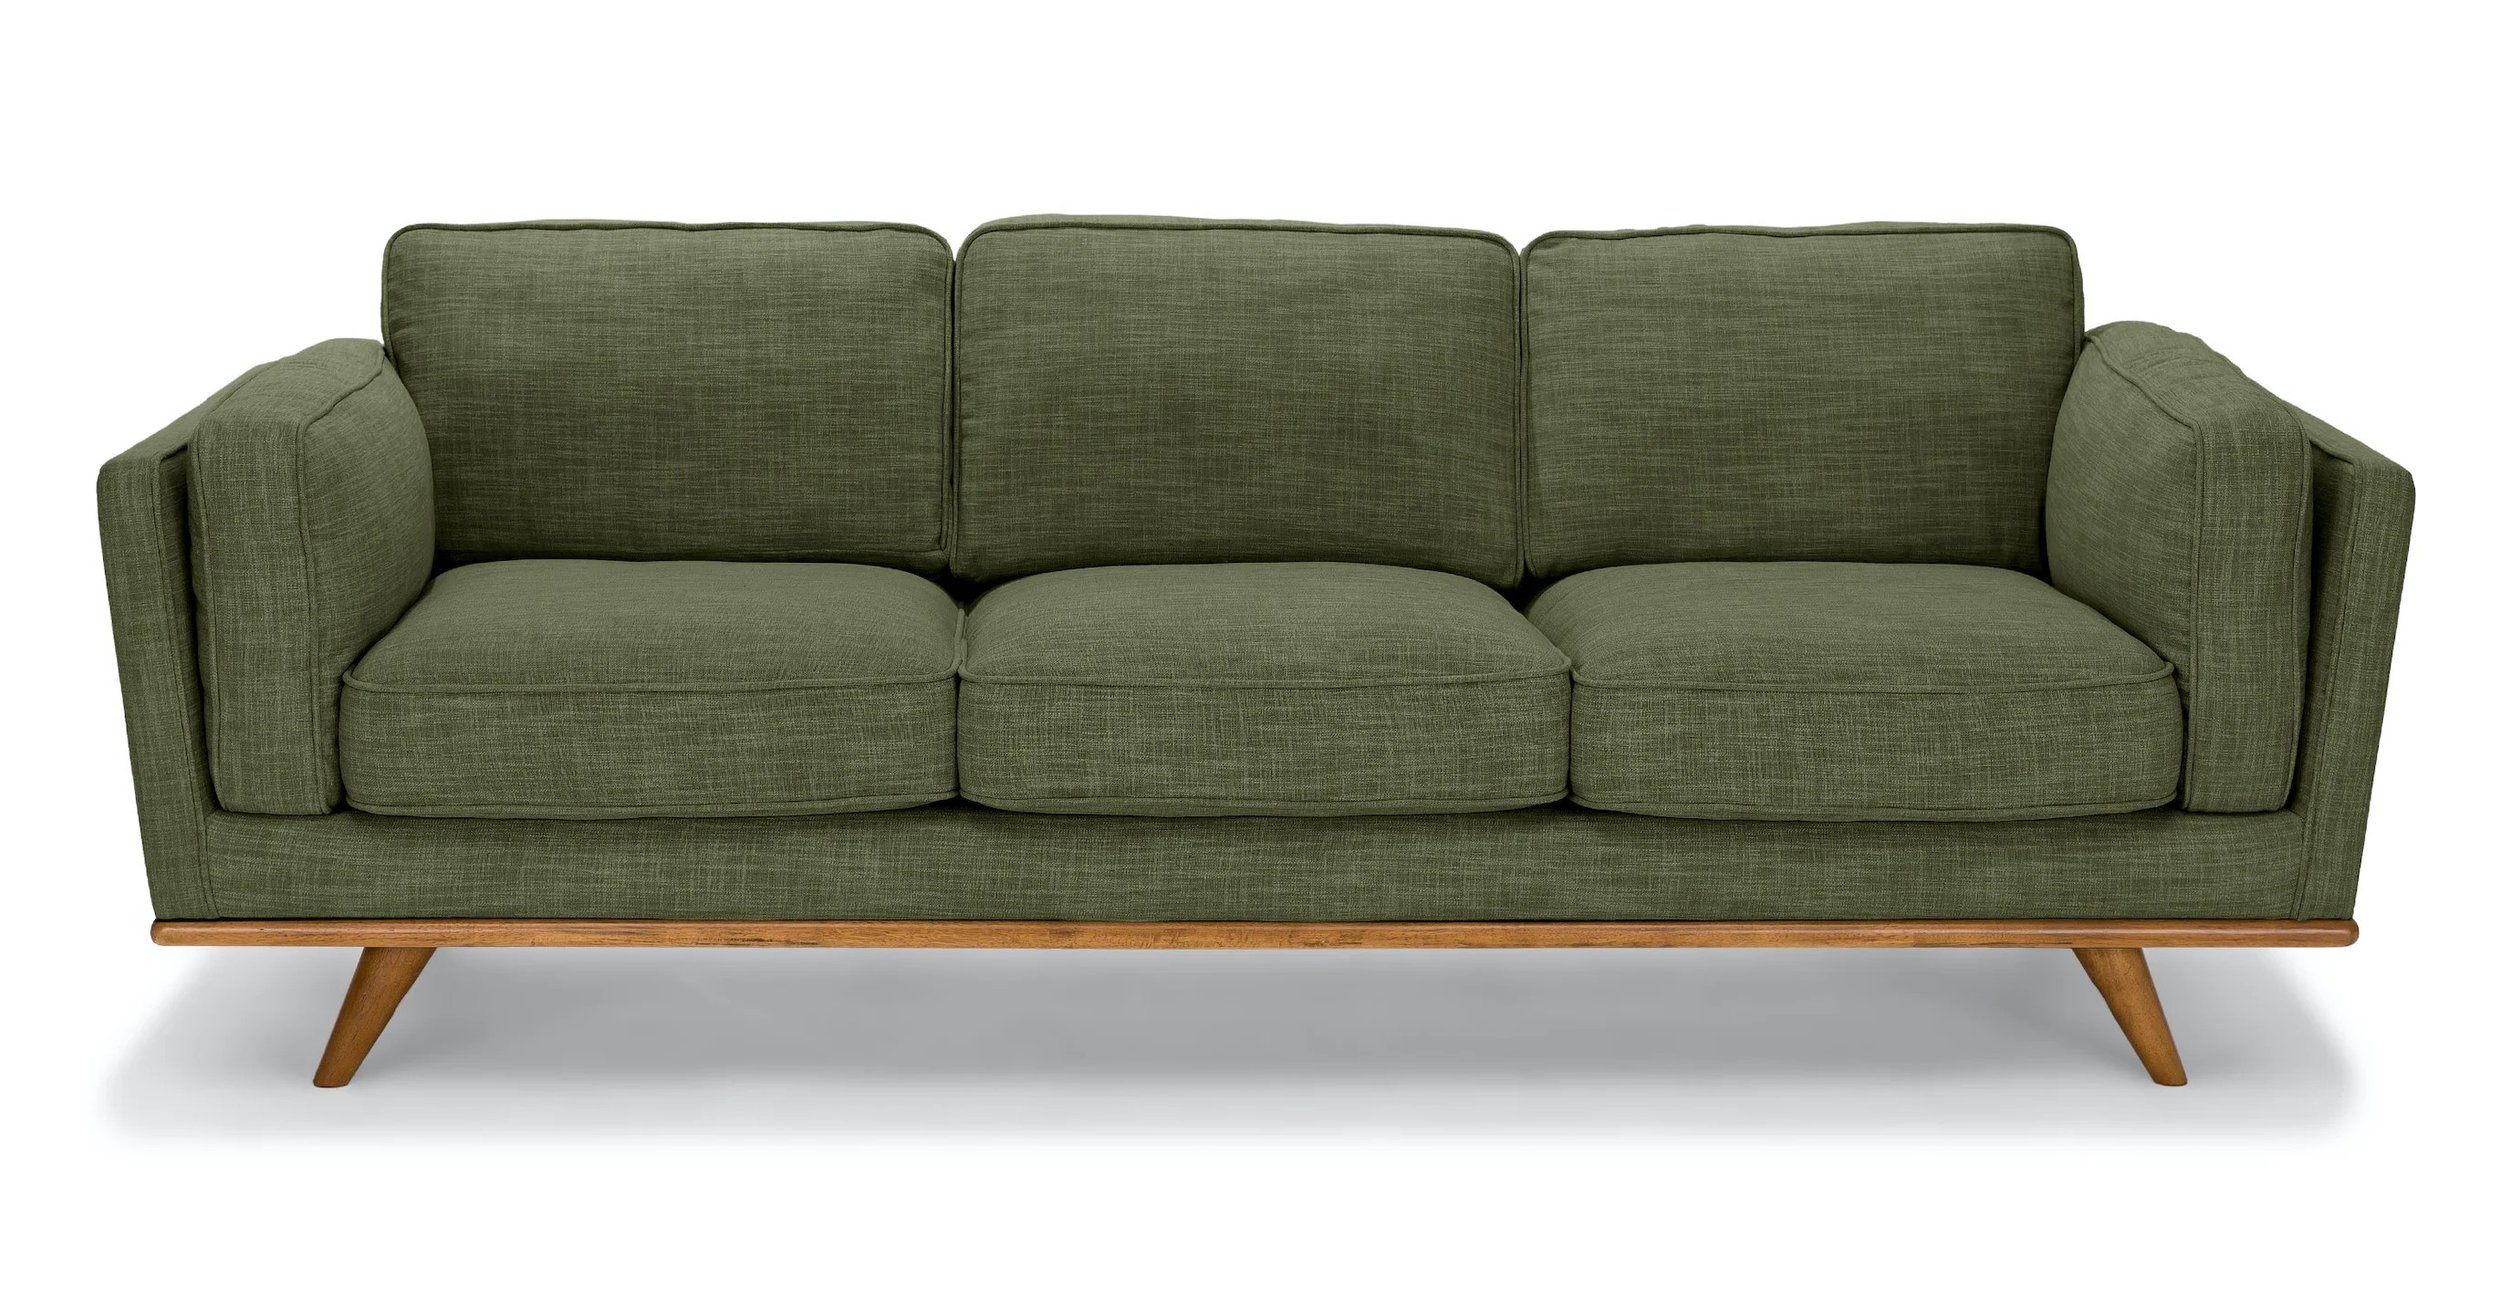 Article | Timber sofa in Olio Green.